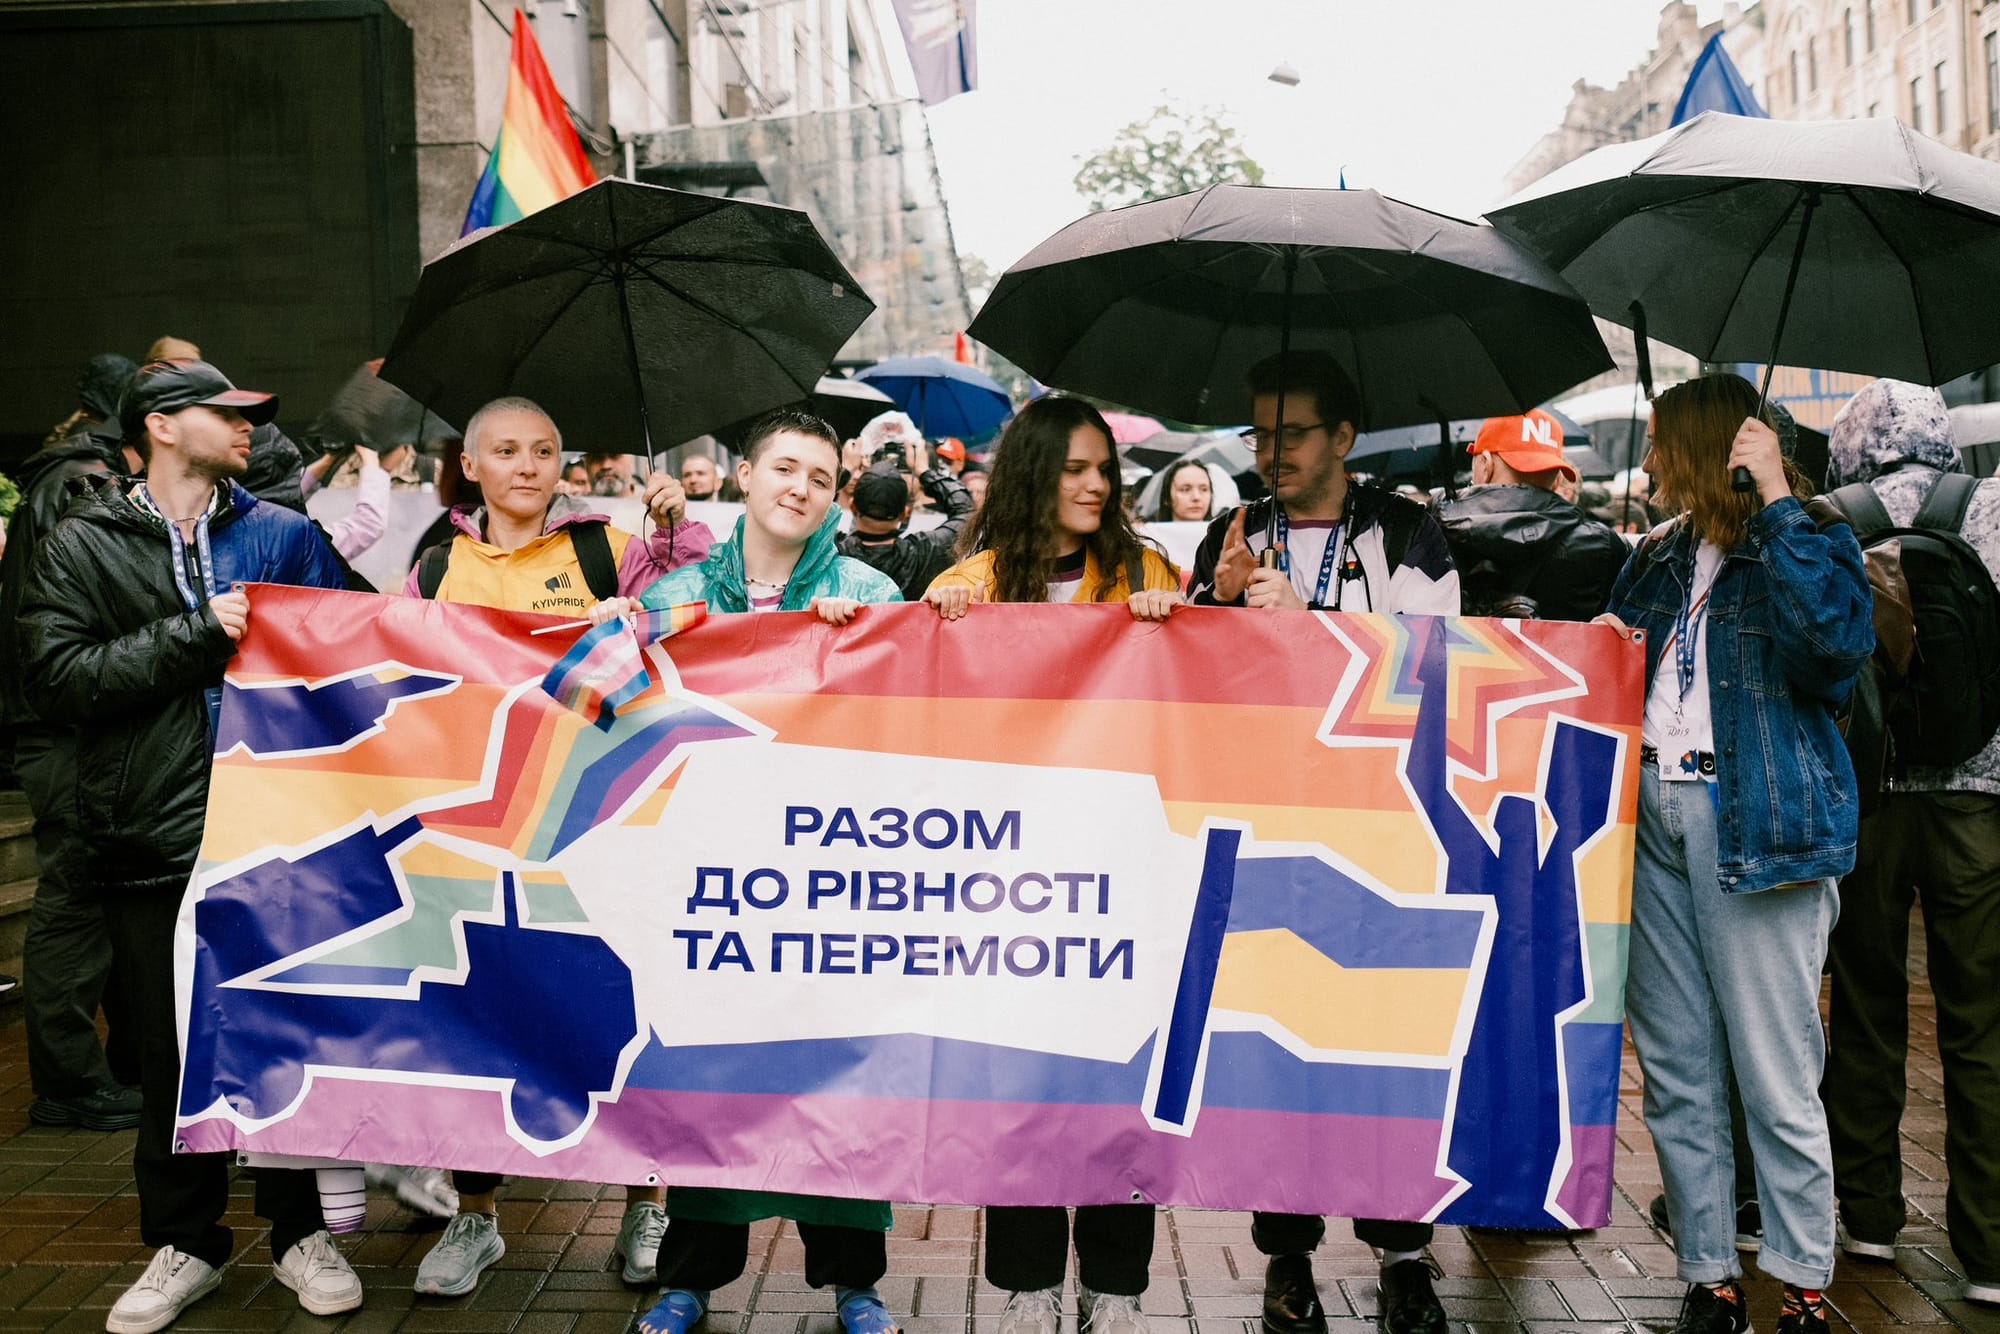 Kyiv Pride cut short by threats of violence